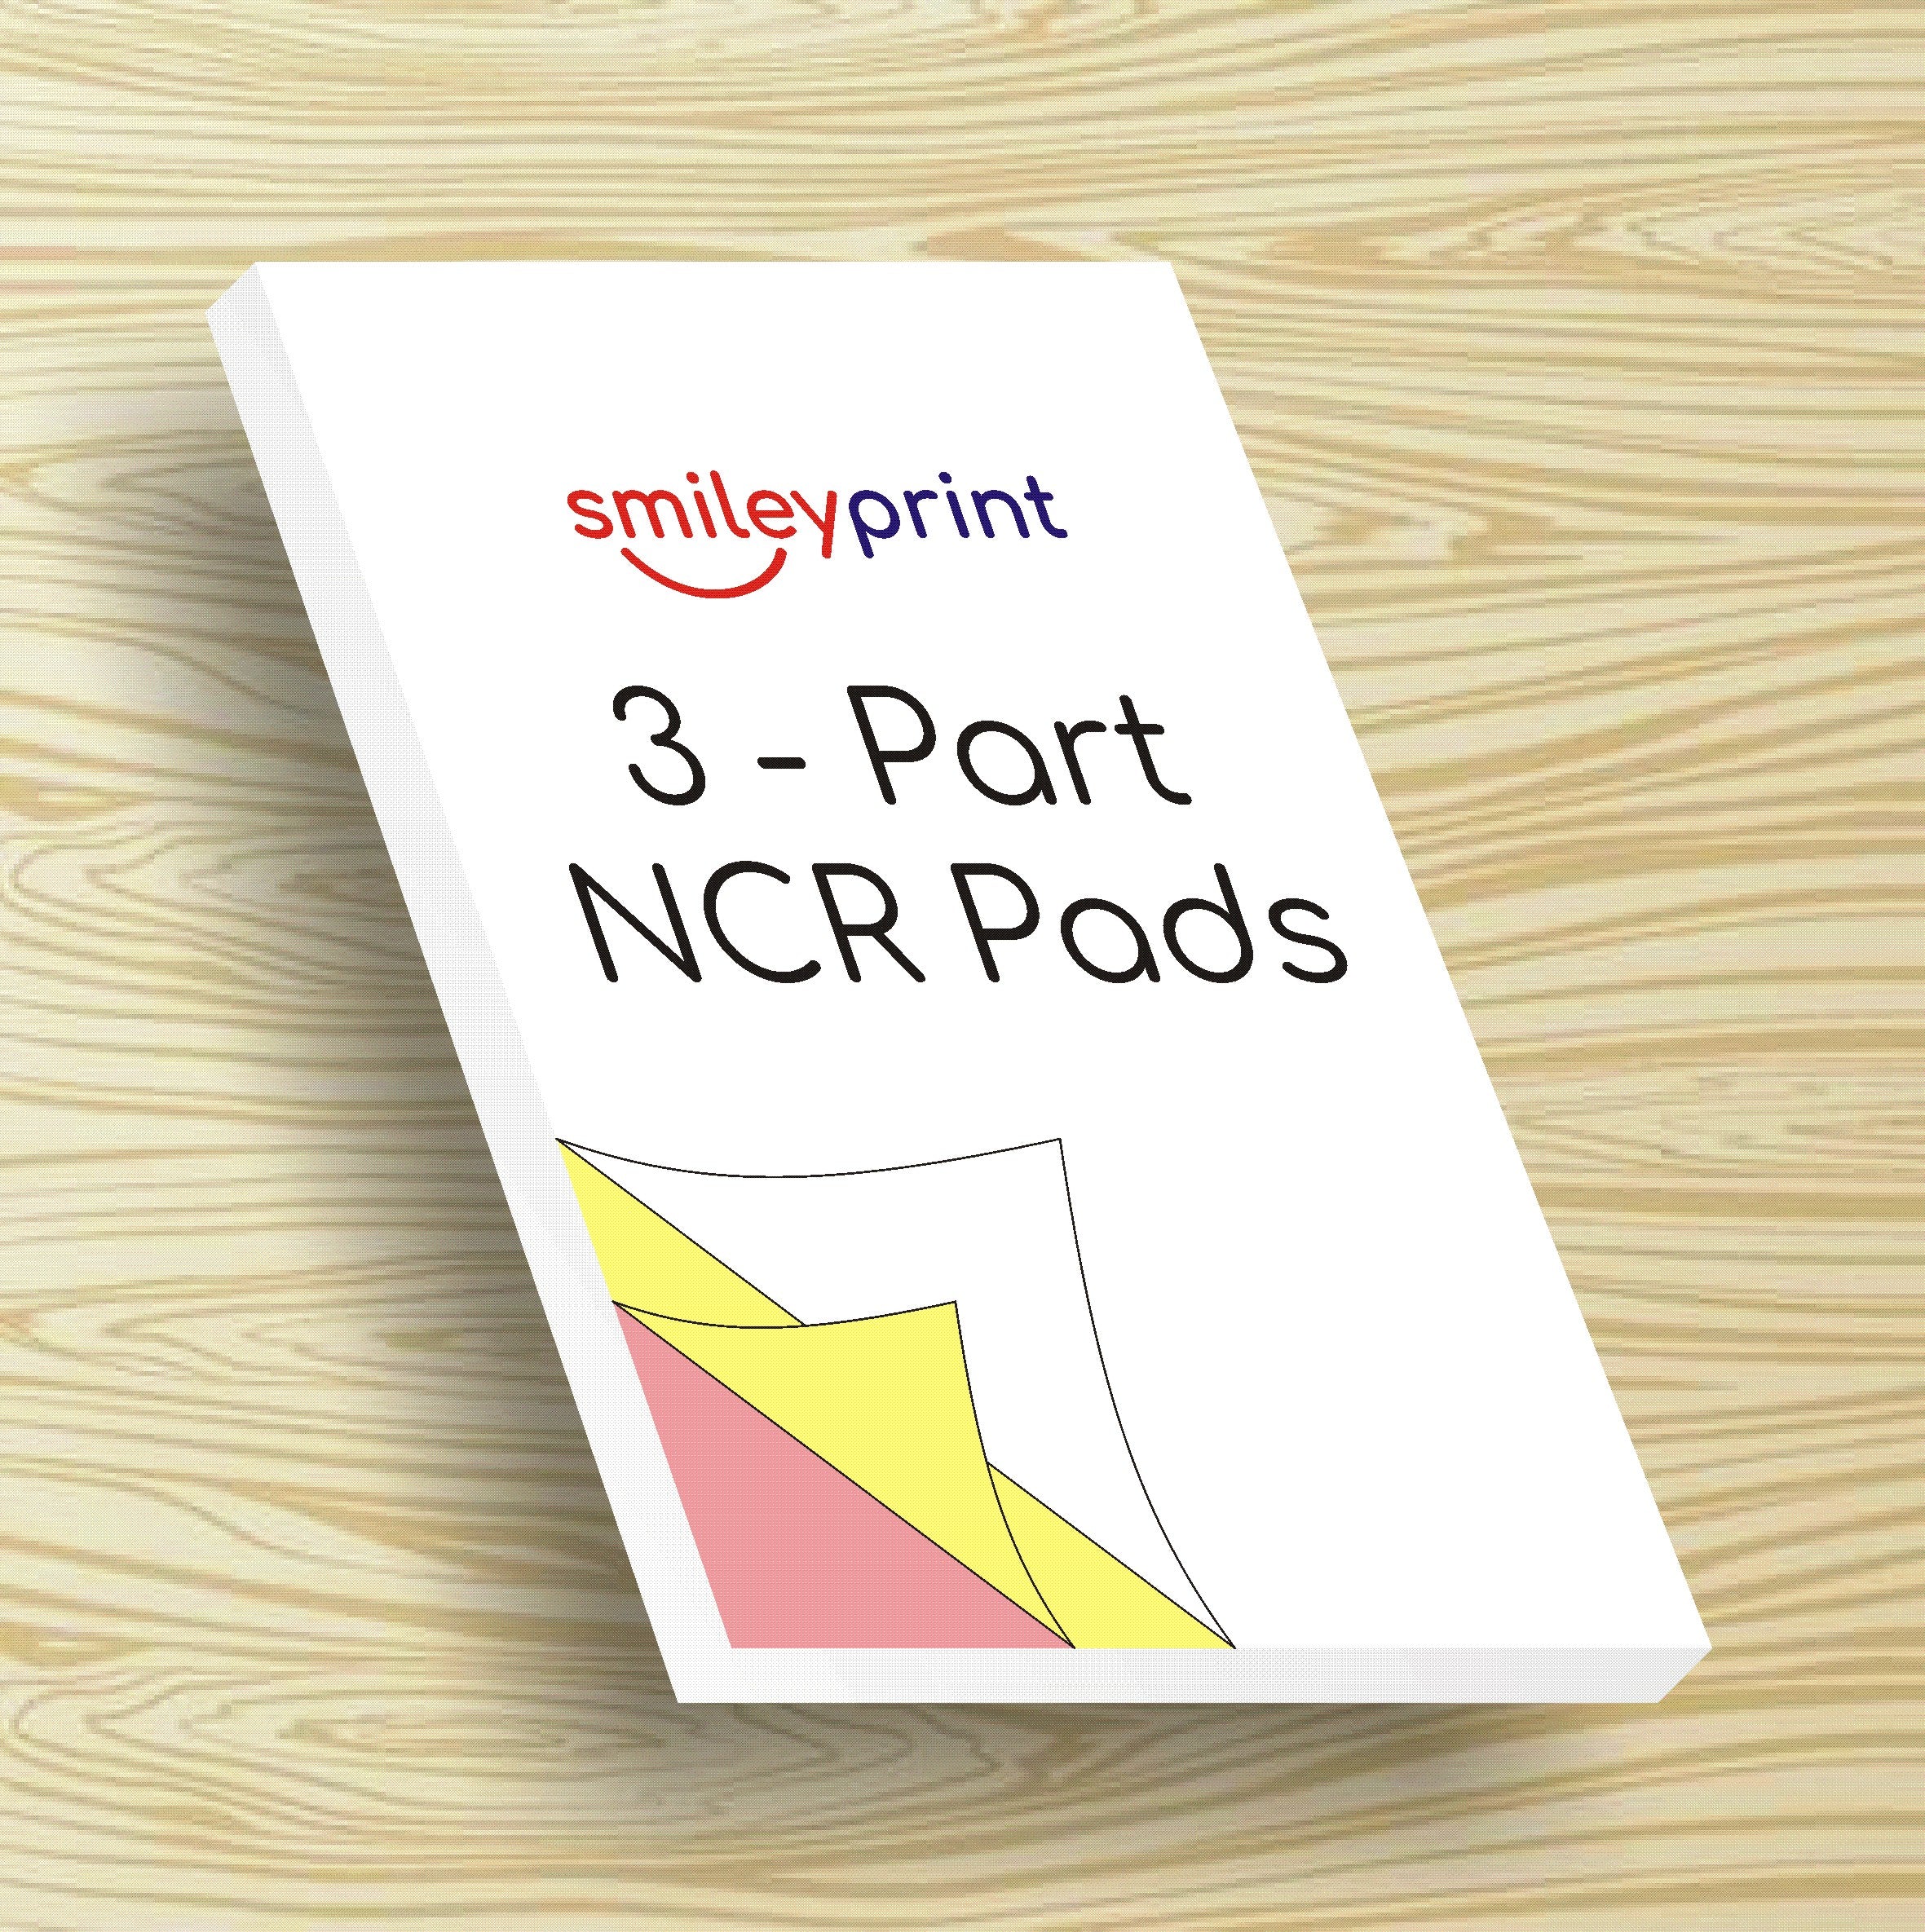 3 Part NCR Pads - Print Shop Express